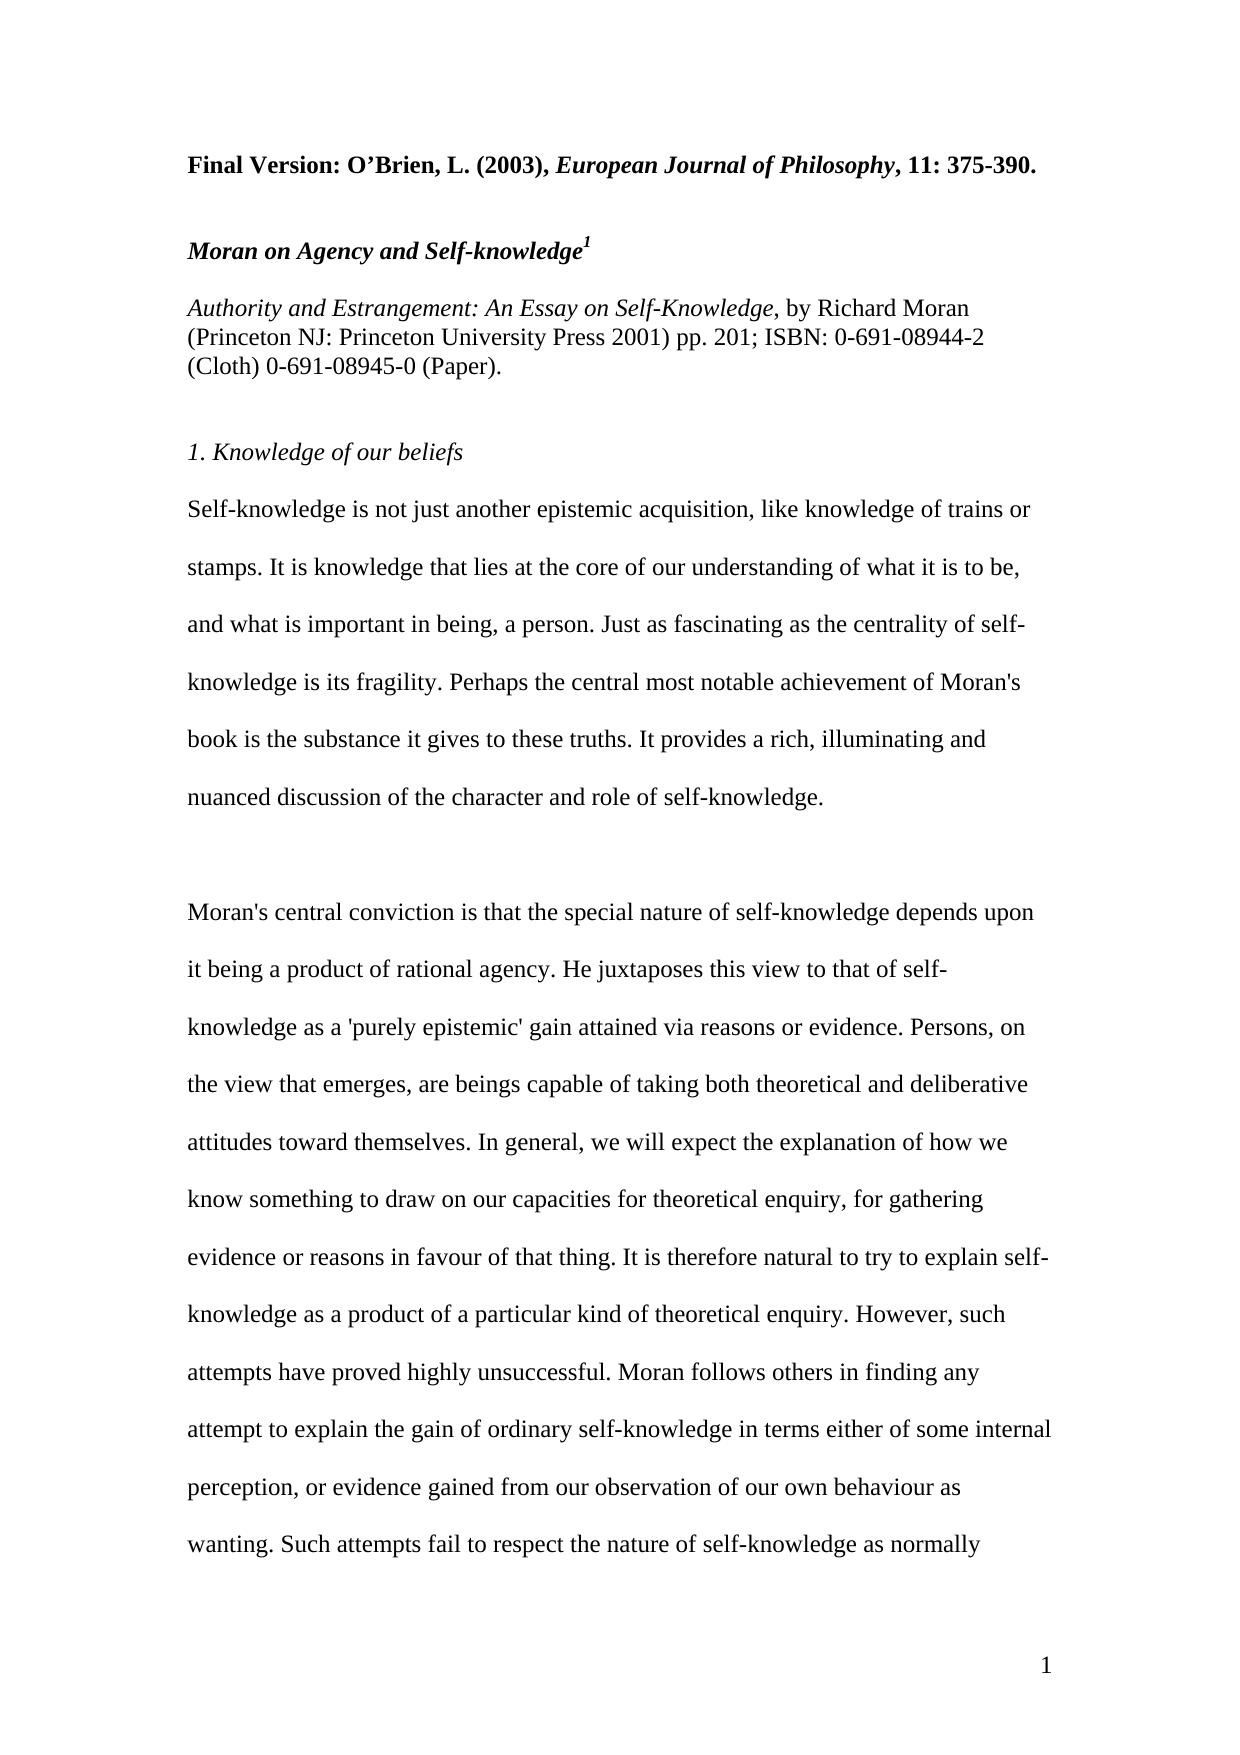 Richard Moran Authority and Estrangement (Princeton NJ: Princeton University Press 2001) pp